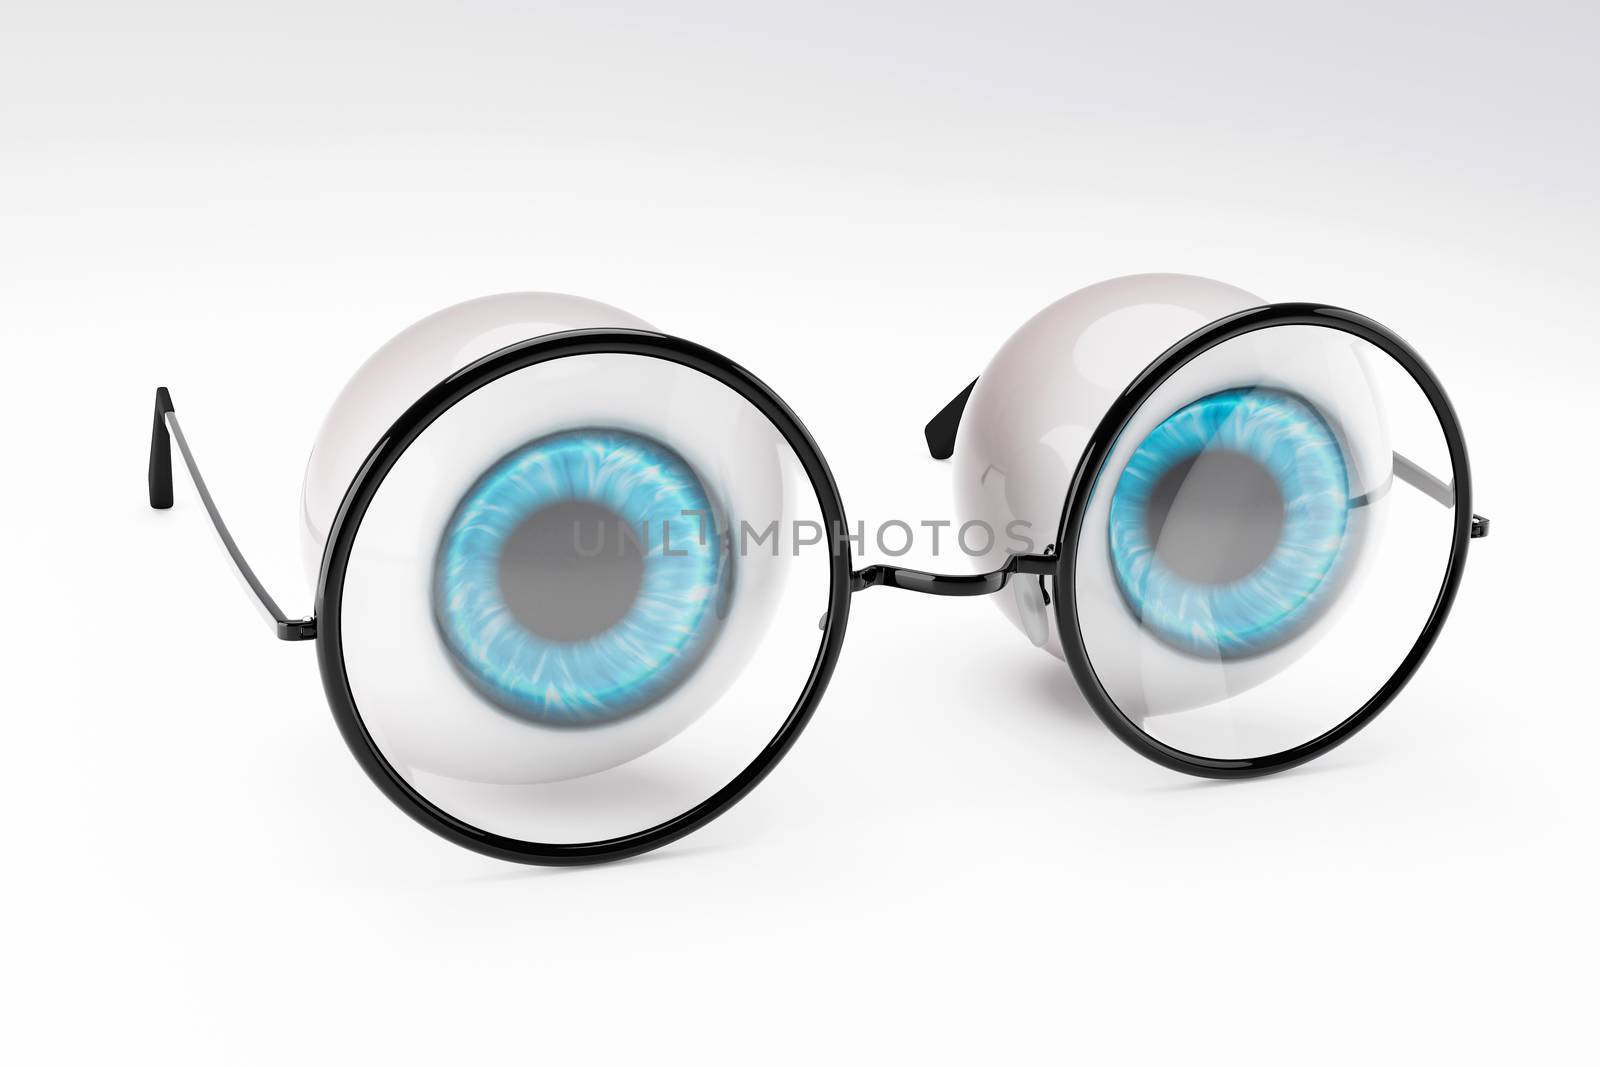 The blue eyeball of the human eye and black round glasses. by SaitanSainam